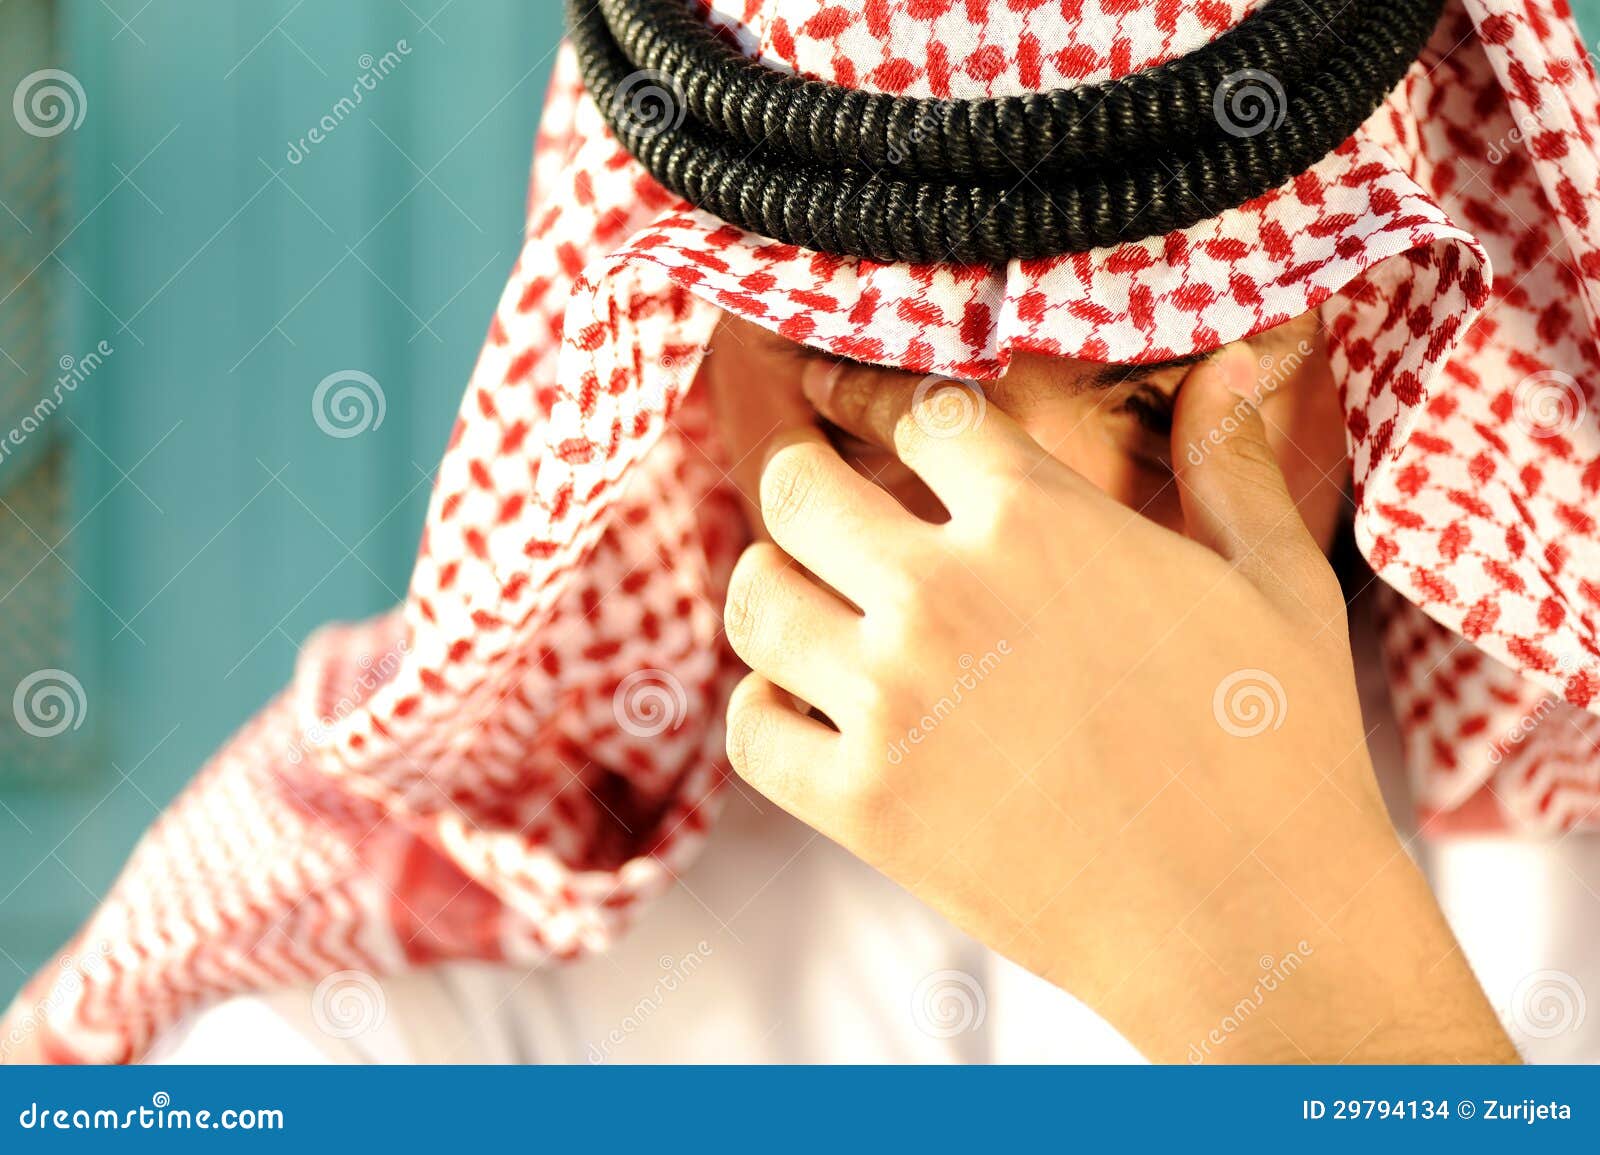 stressed-arabic-man-sad-cry-29794134.jpg